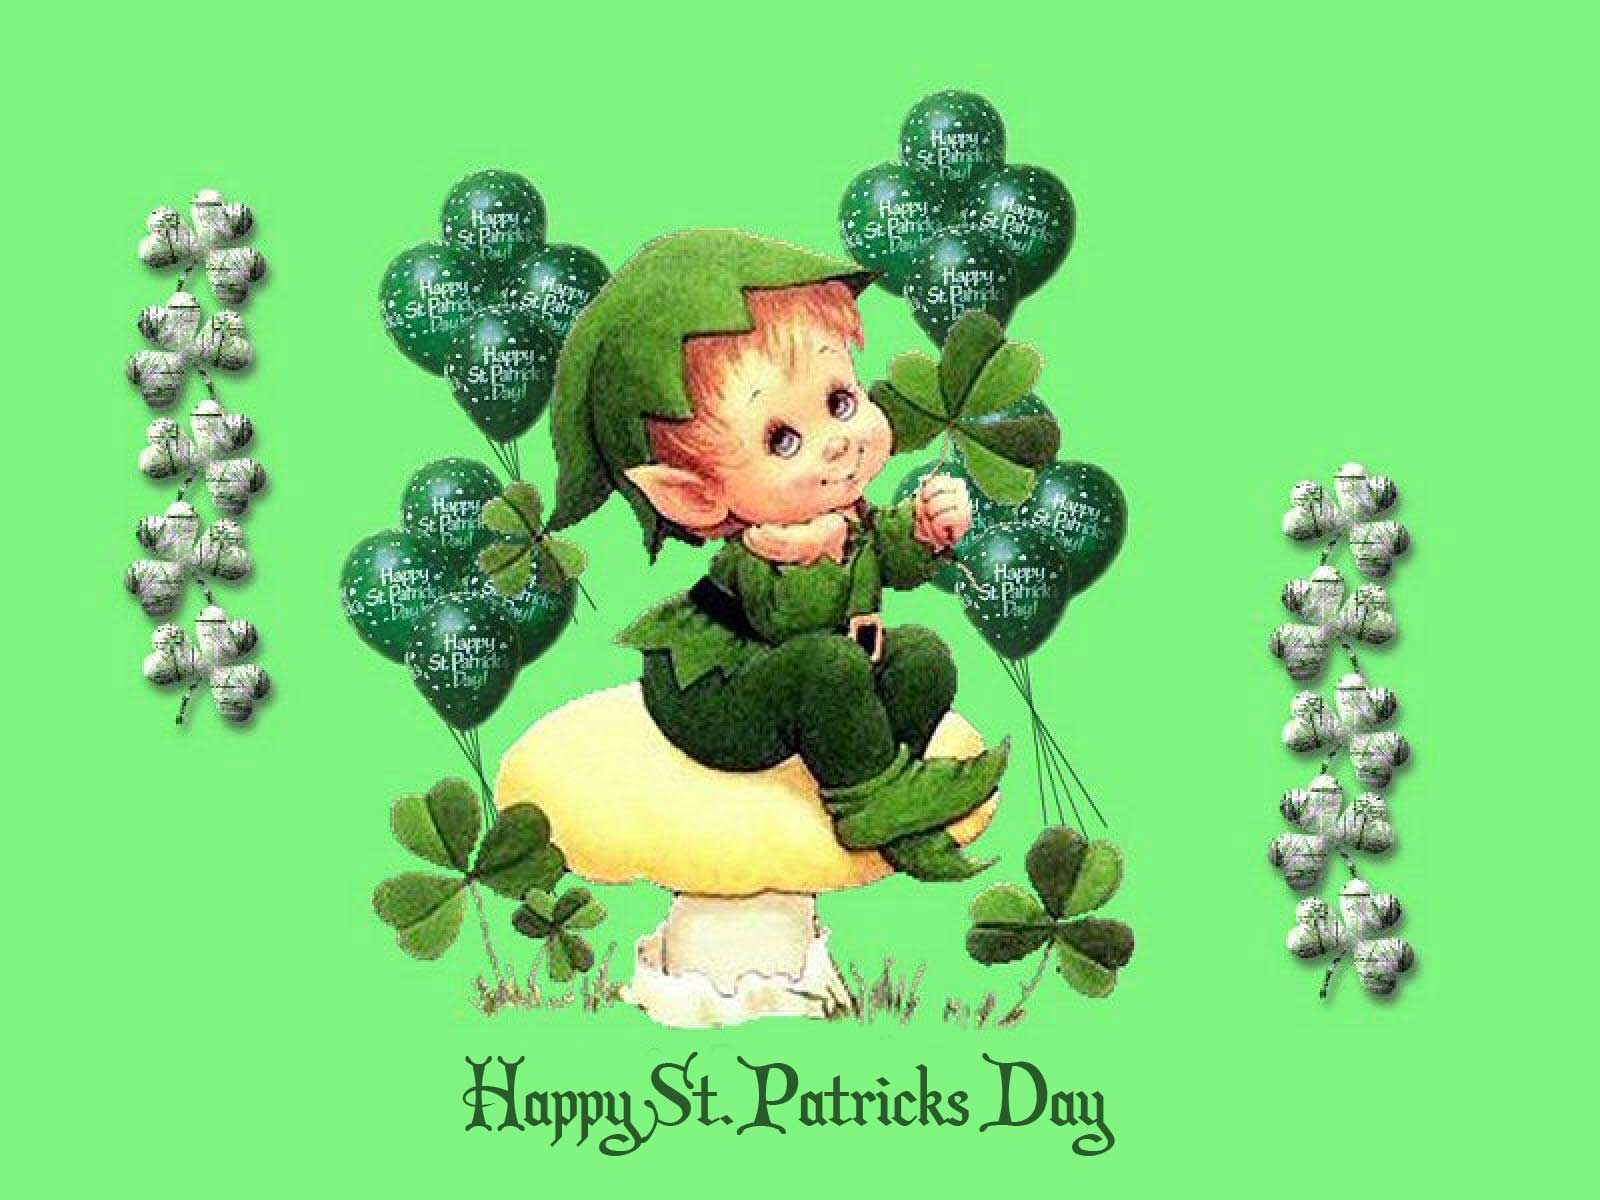 Saint Patrick's Day 2014, High Definition, High Quality. Wallpaper Safa. St patricks day wallpaper, St patricks day picture, Happy st patricks day